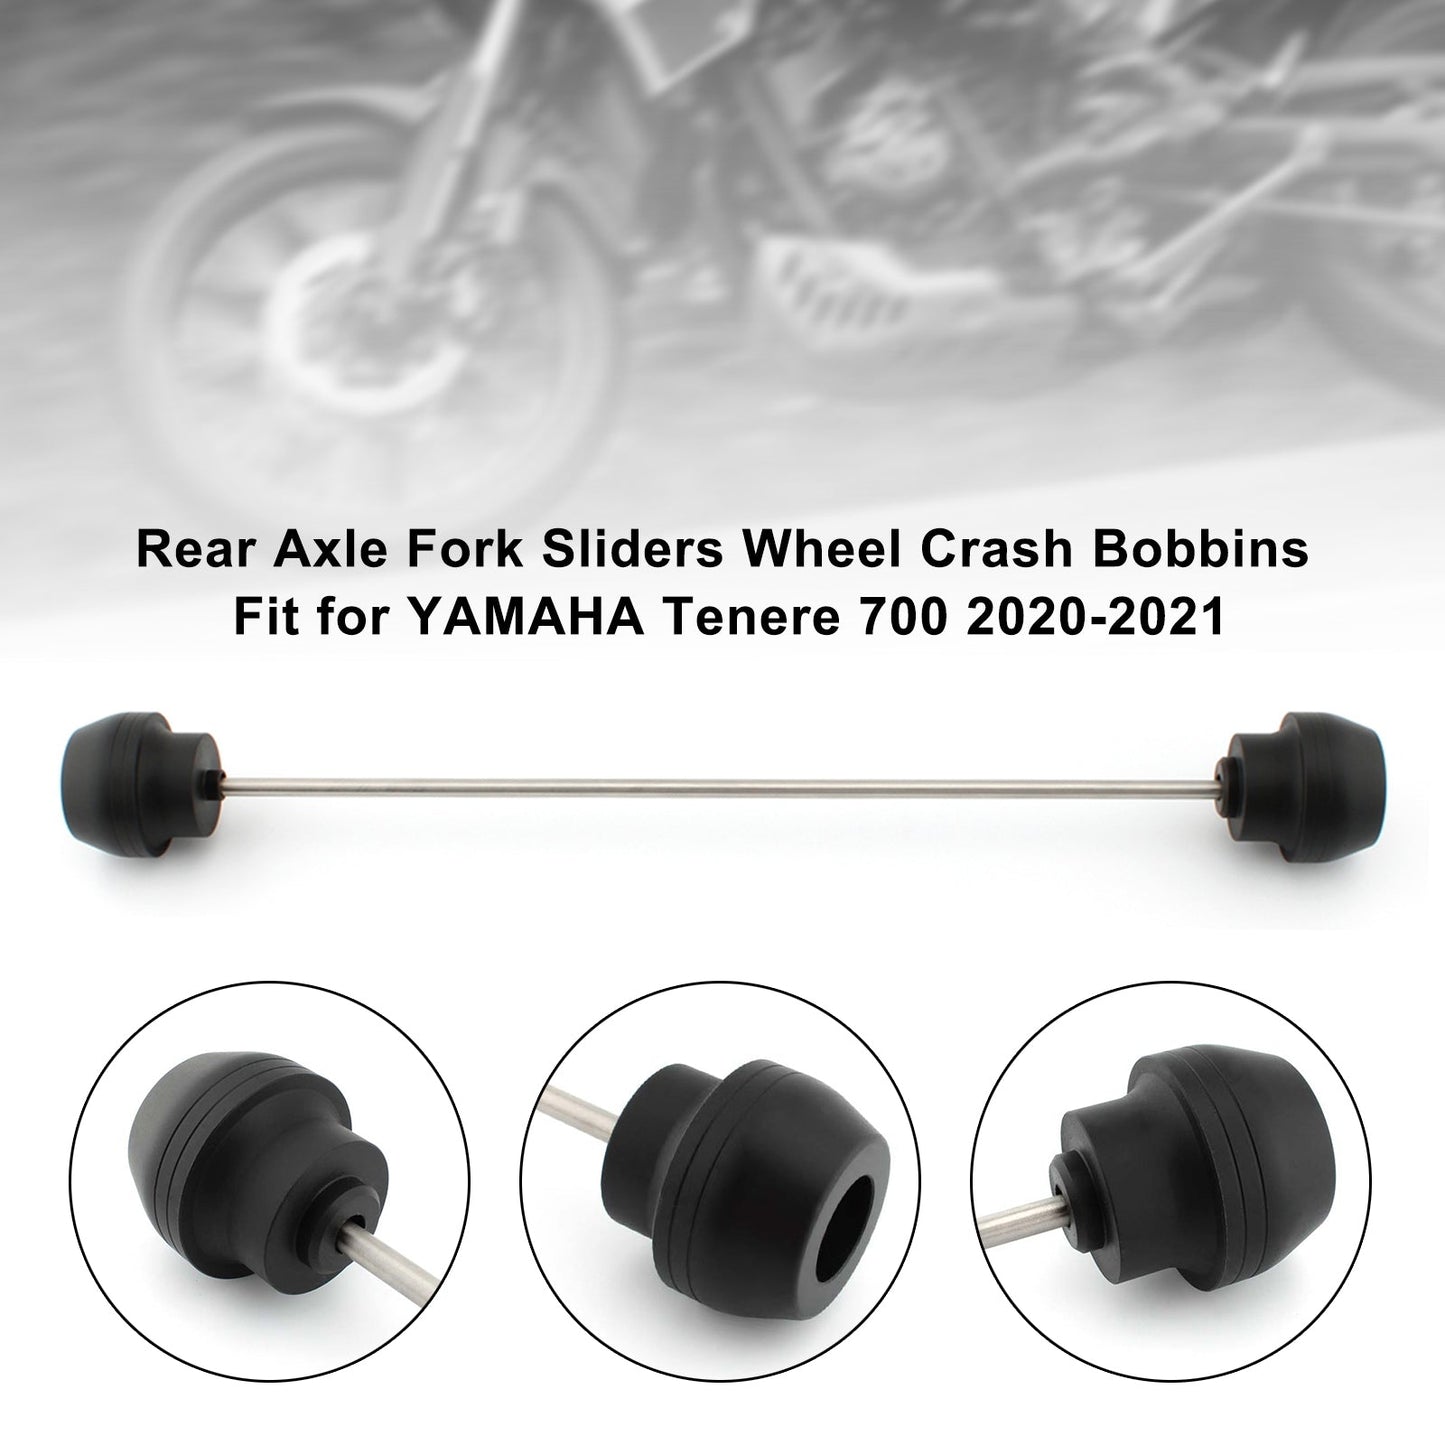 Rear Axle Fork Sliders Wheel Crash Bobbins Fit For Yamaha Tenere 700 20-21